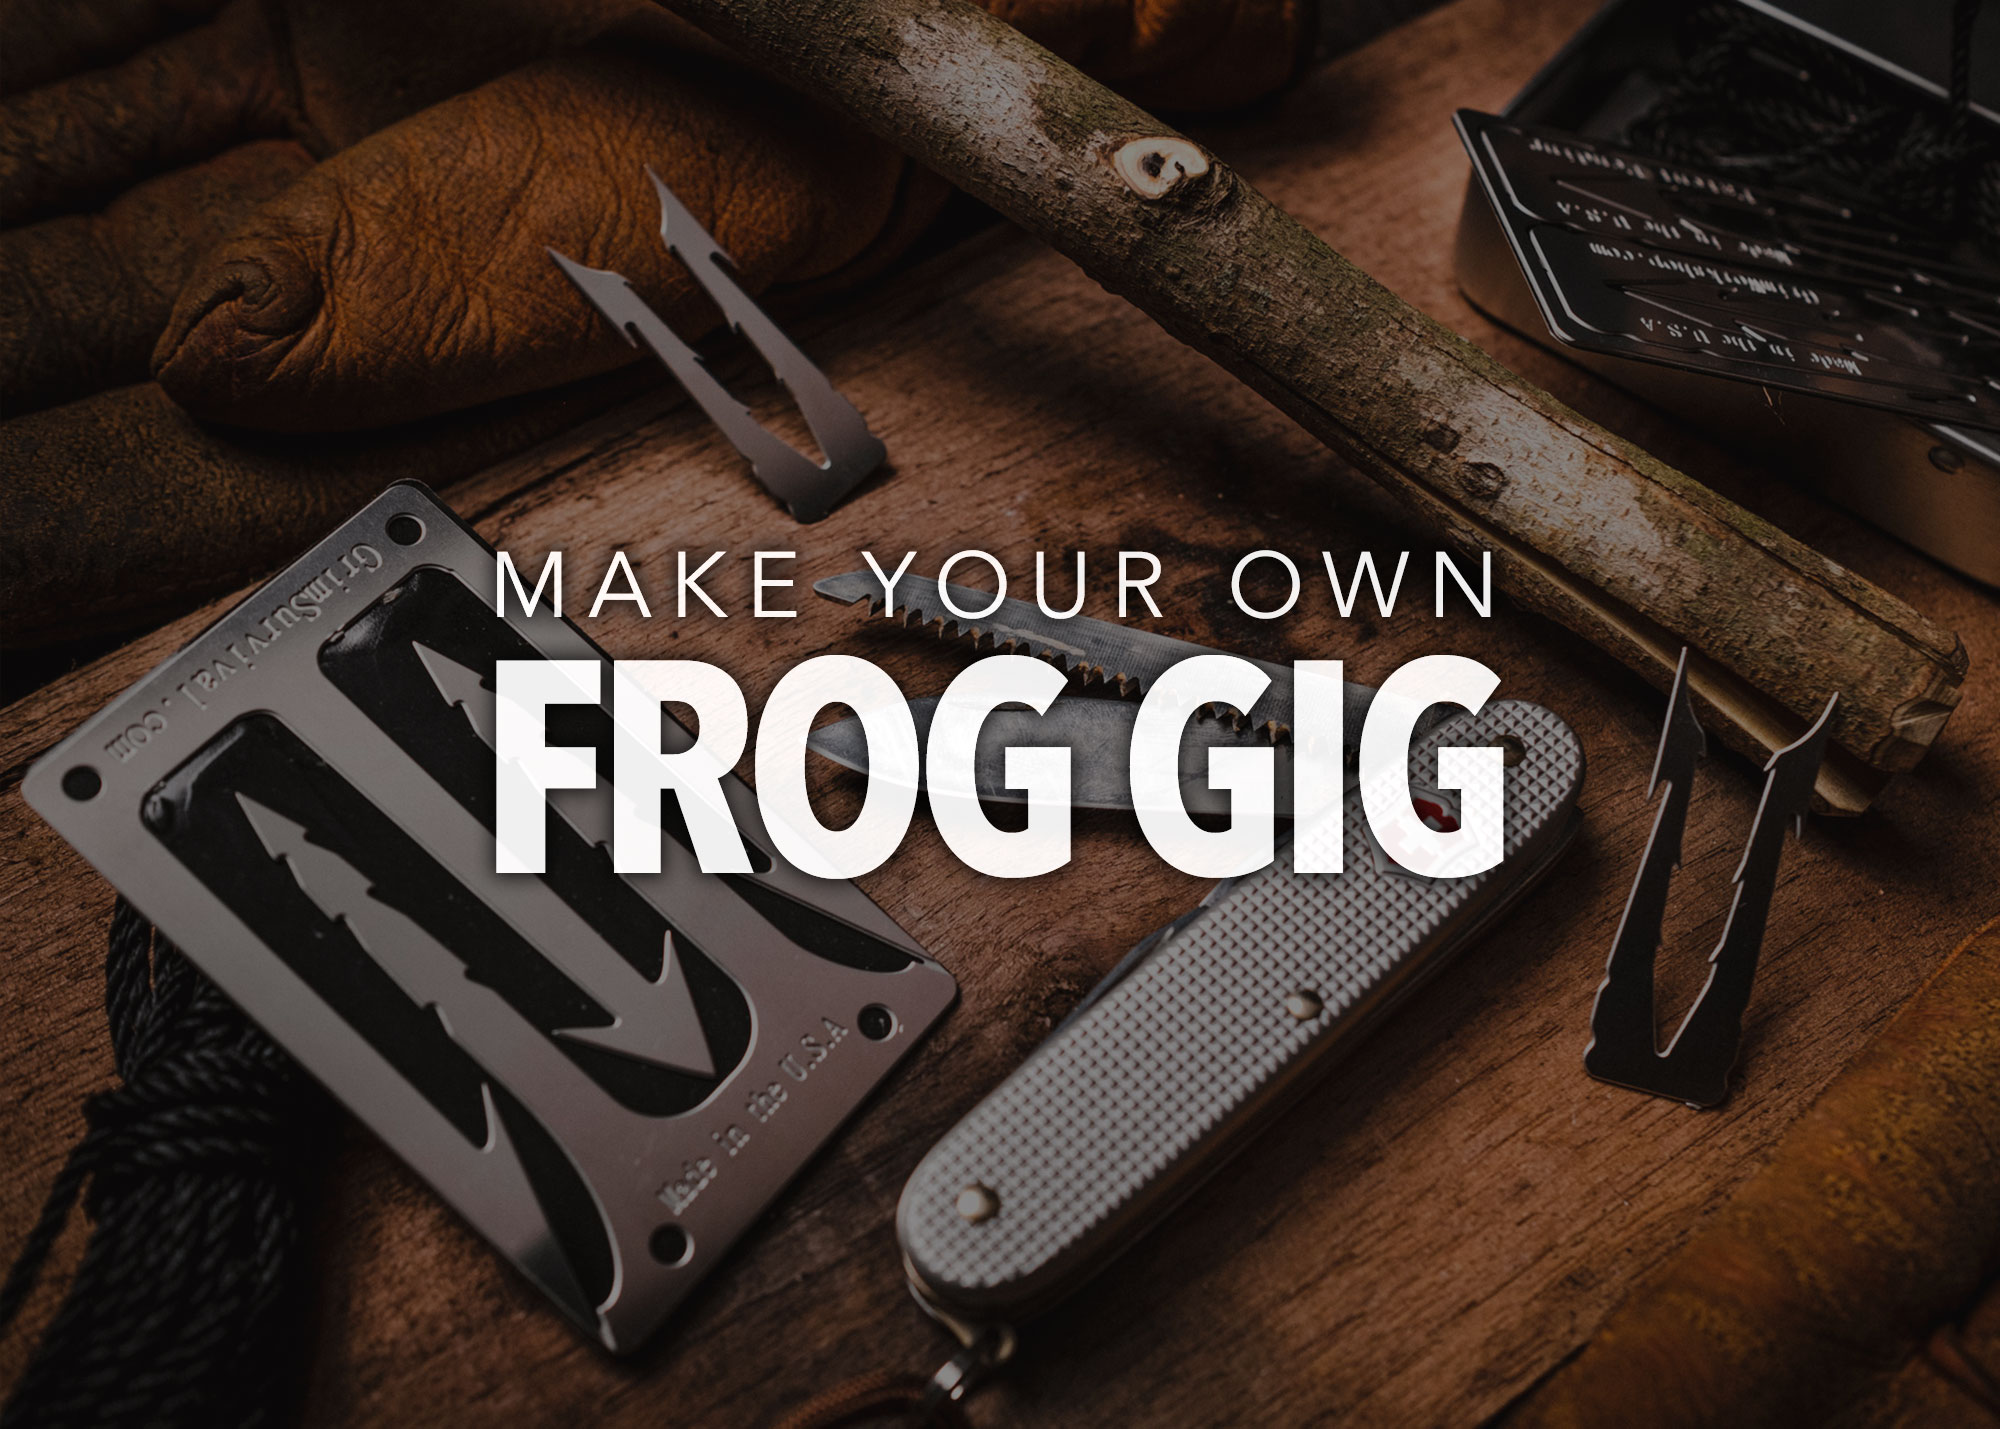 Make your own frog gig